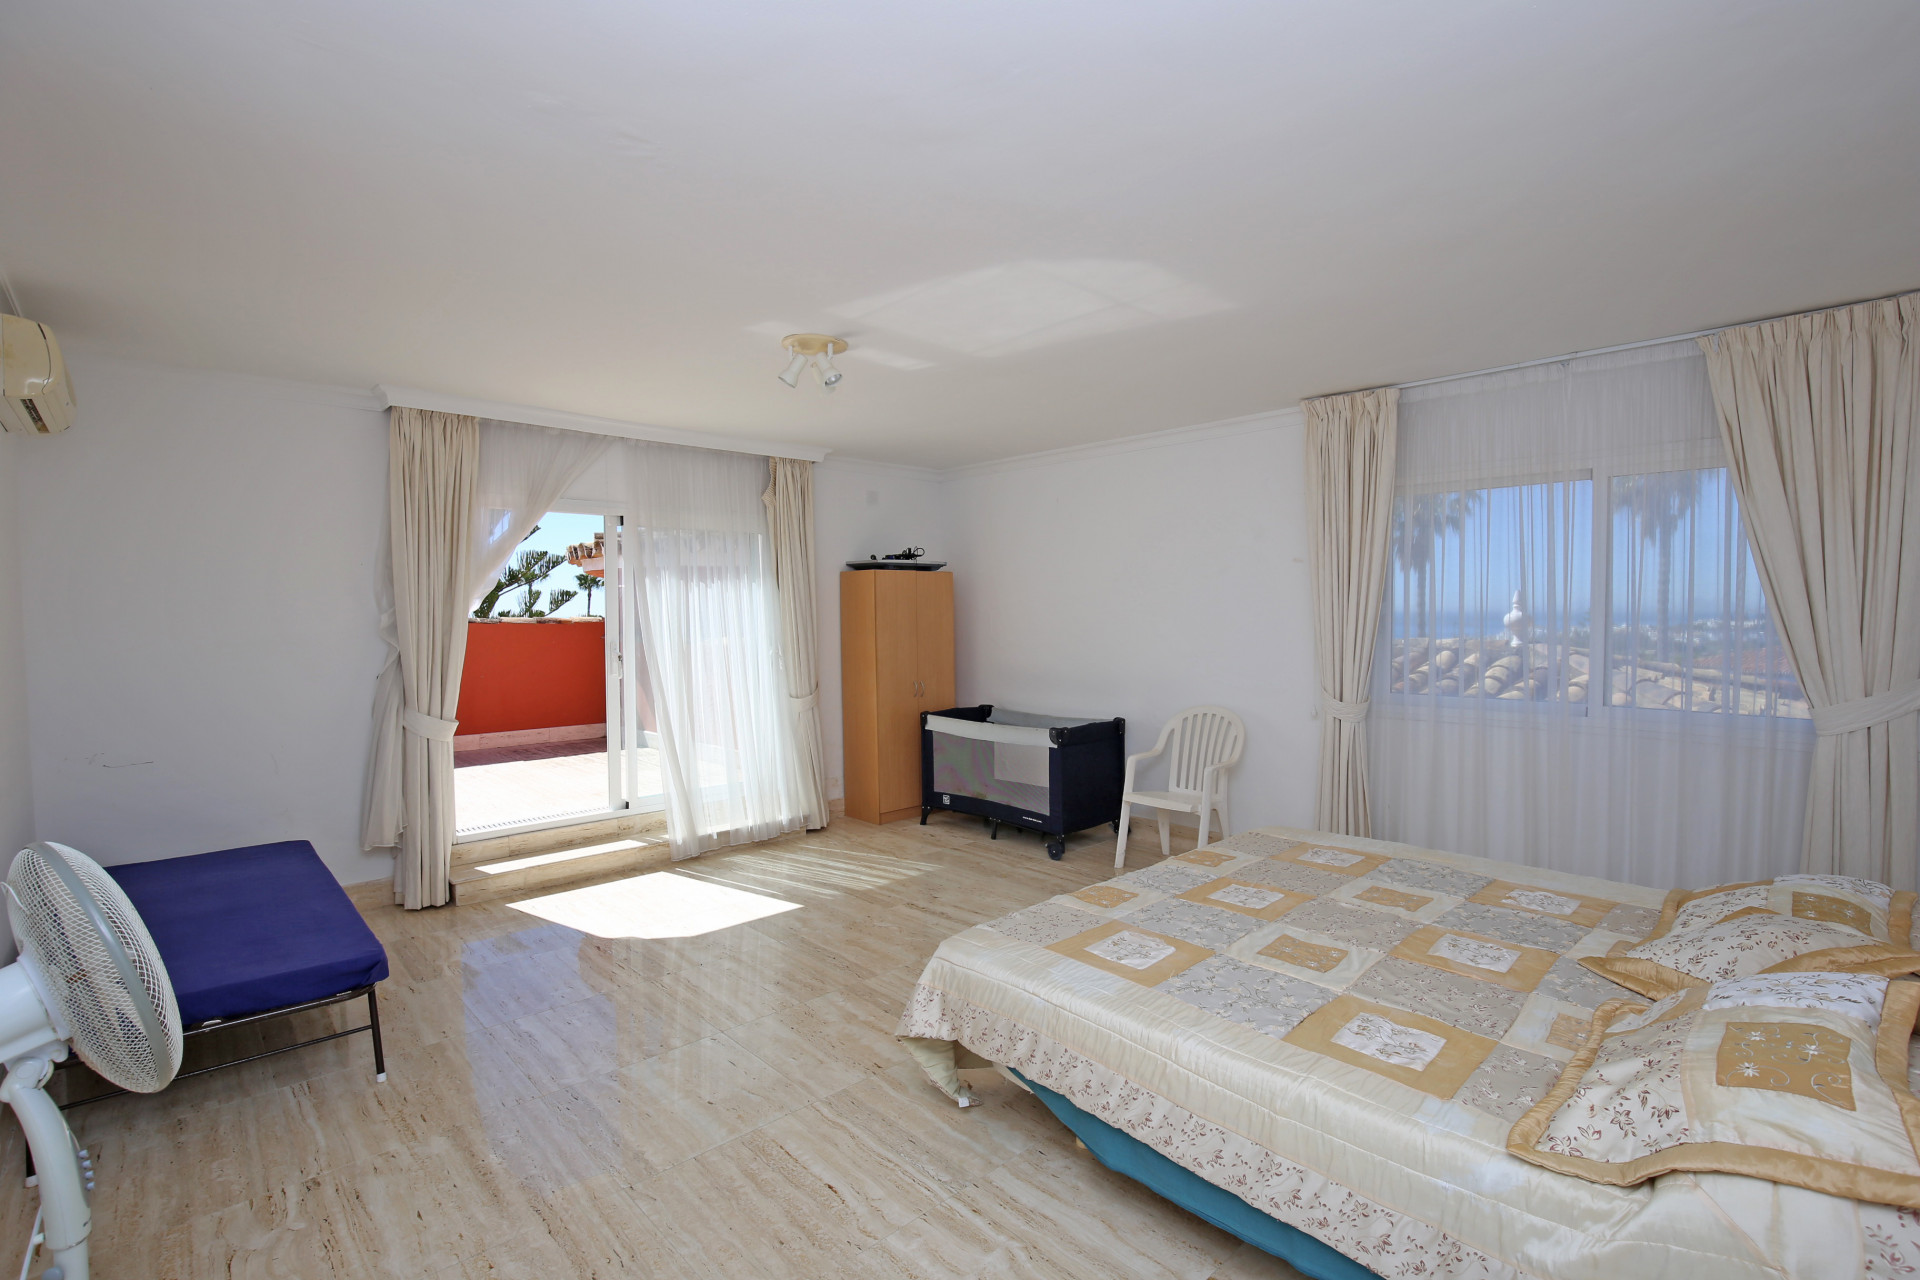 Lovely six bedroom south-facing villa in Estepona